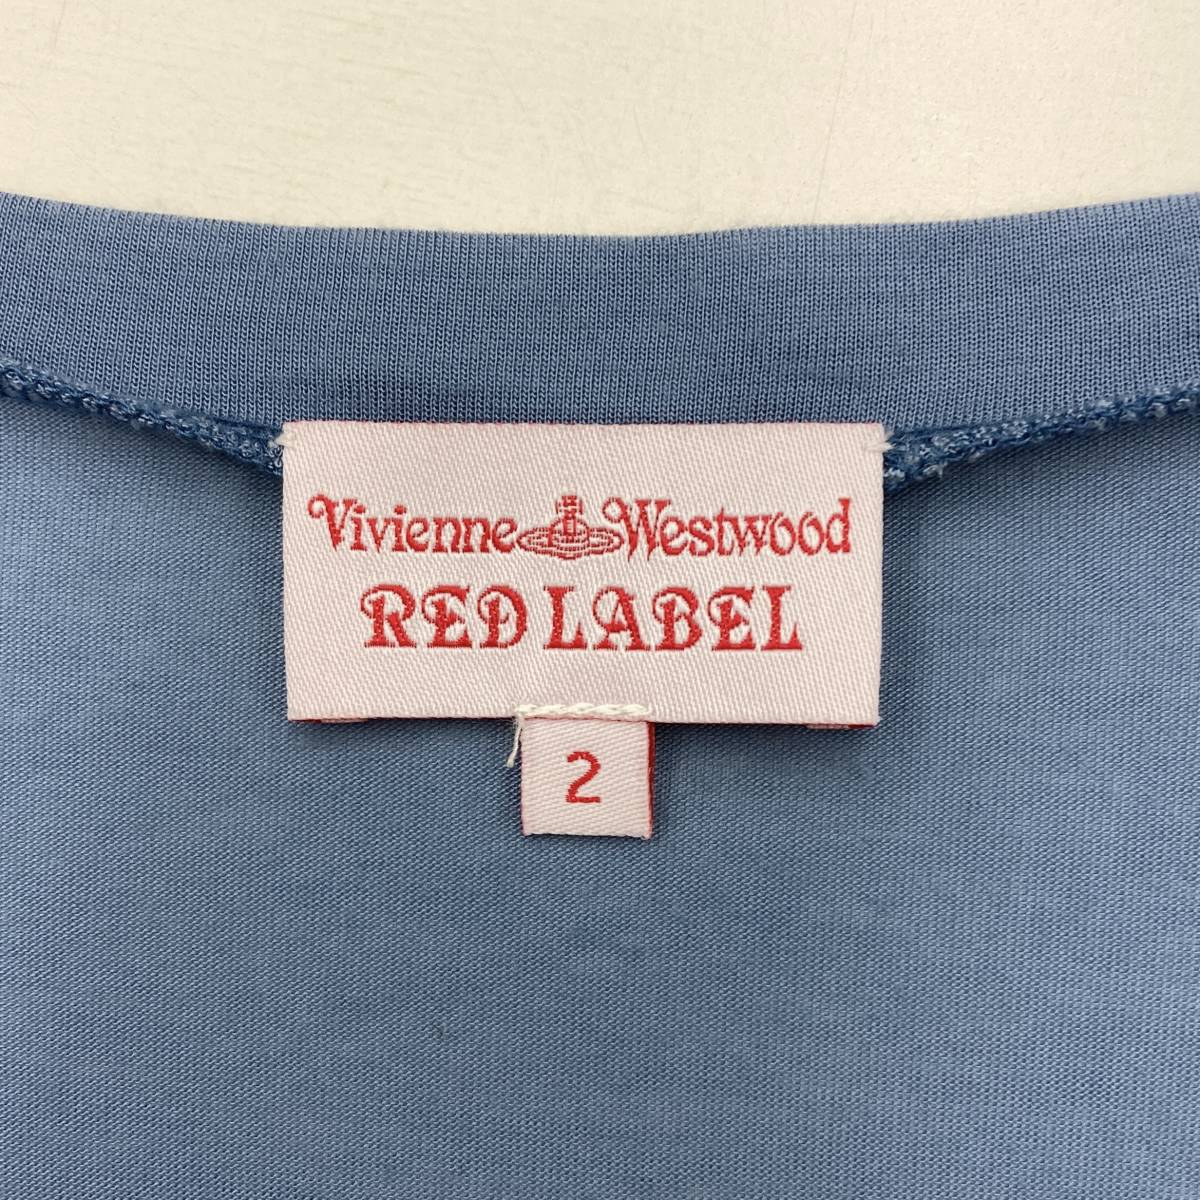  Vivienne Westwood red label DEEP SKY деформация трикотаж с коротким рукавом общий рисунок Logo голубой 2 размер RED LABEL футболка archive 3050249